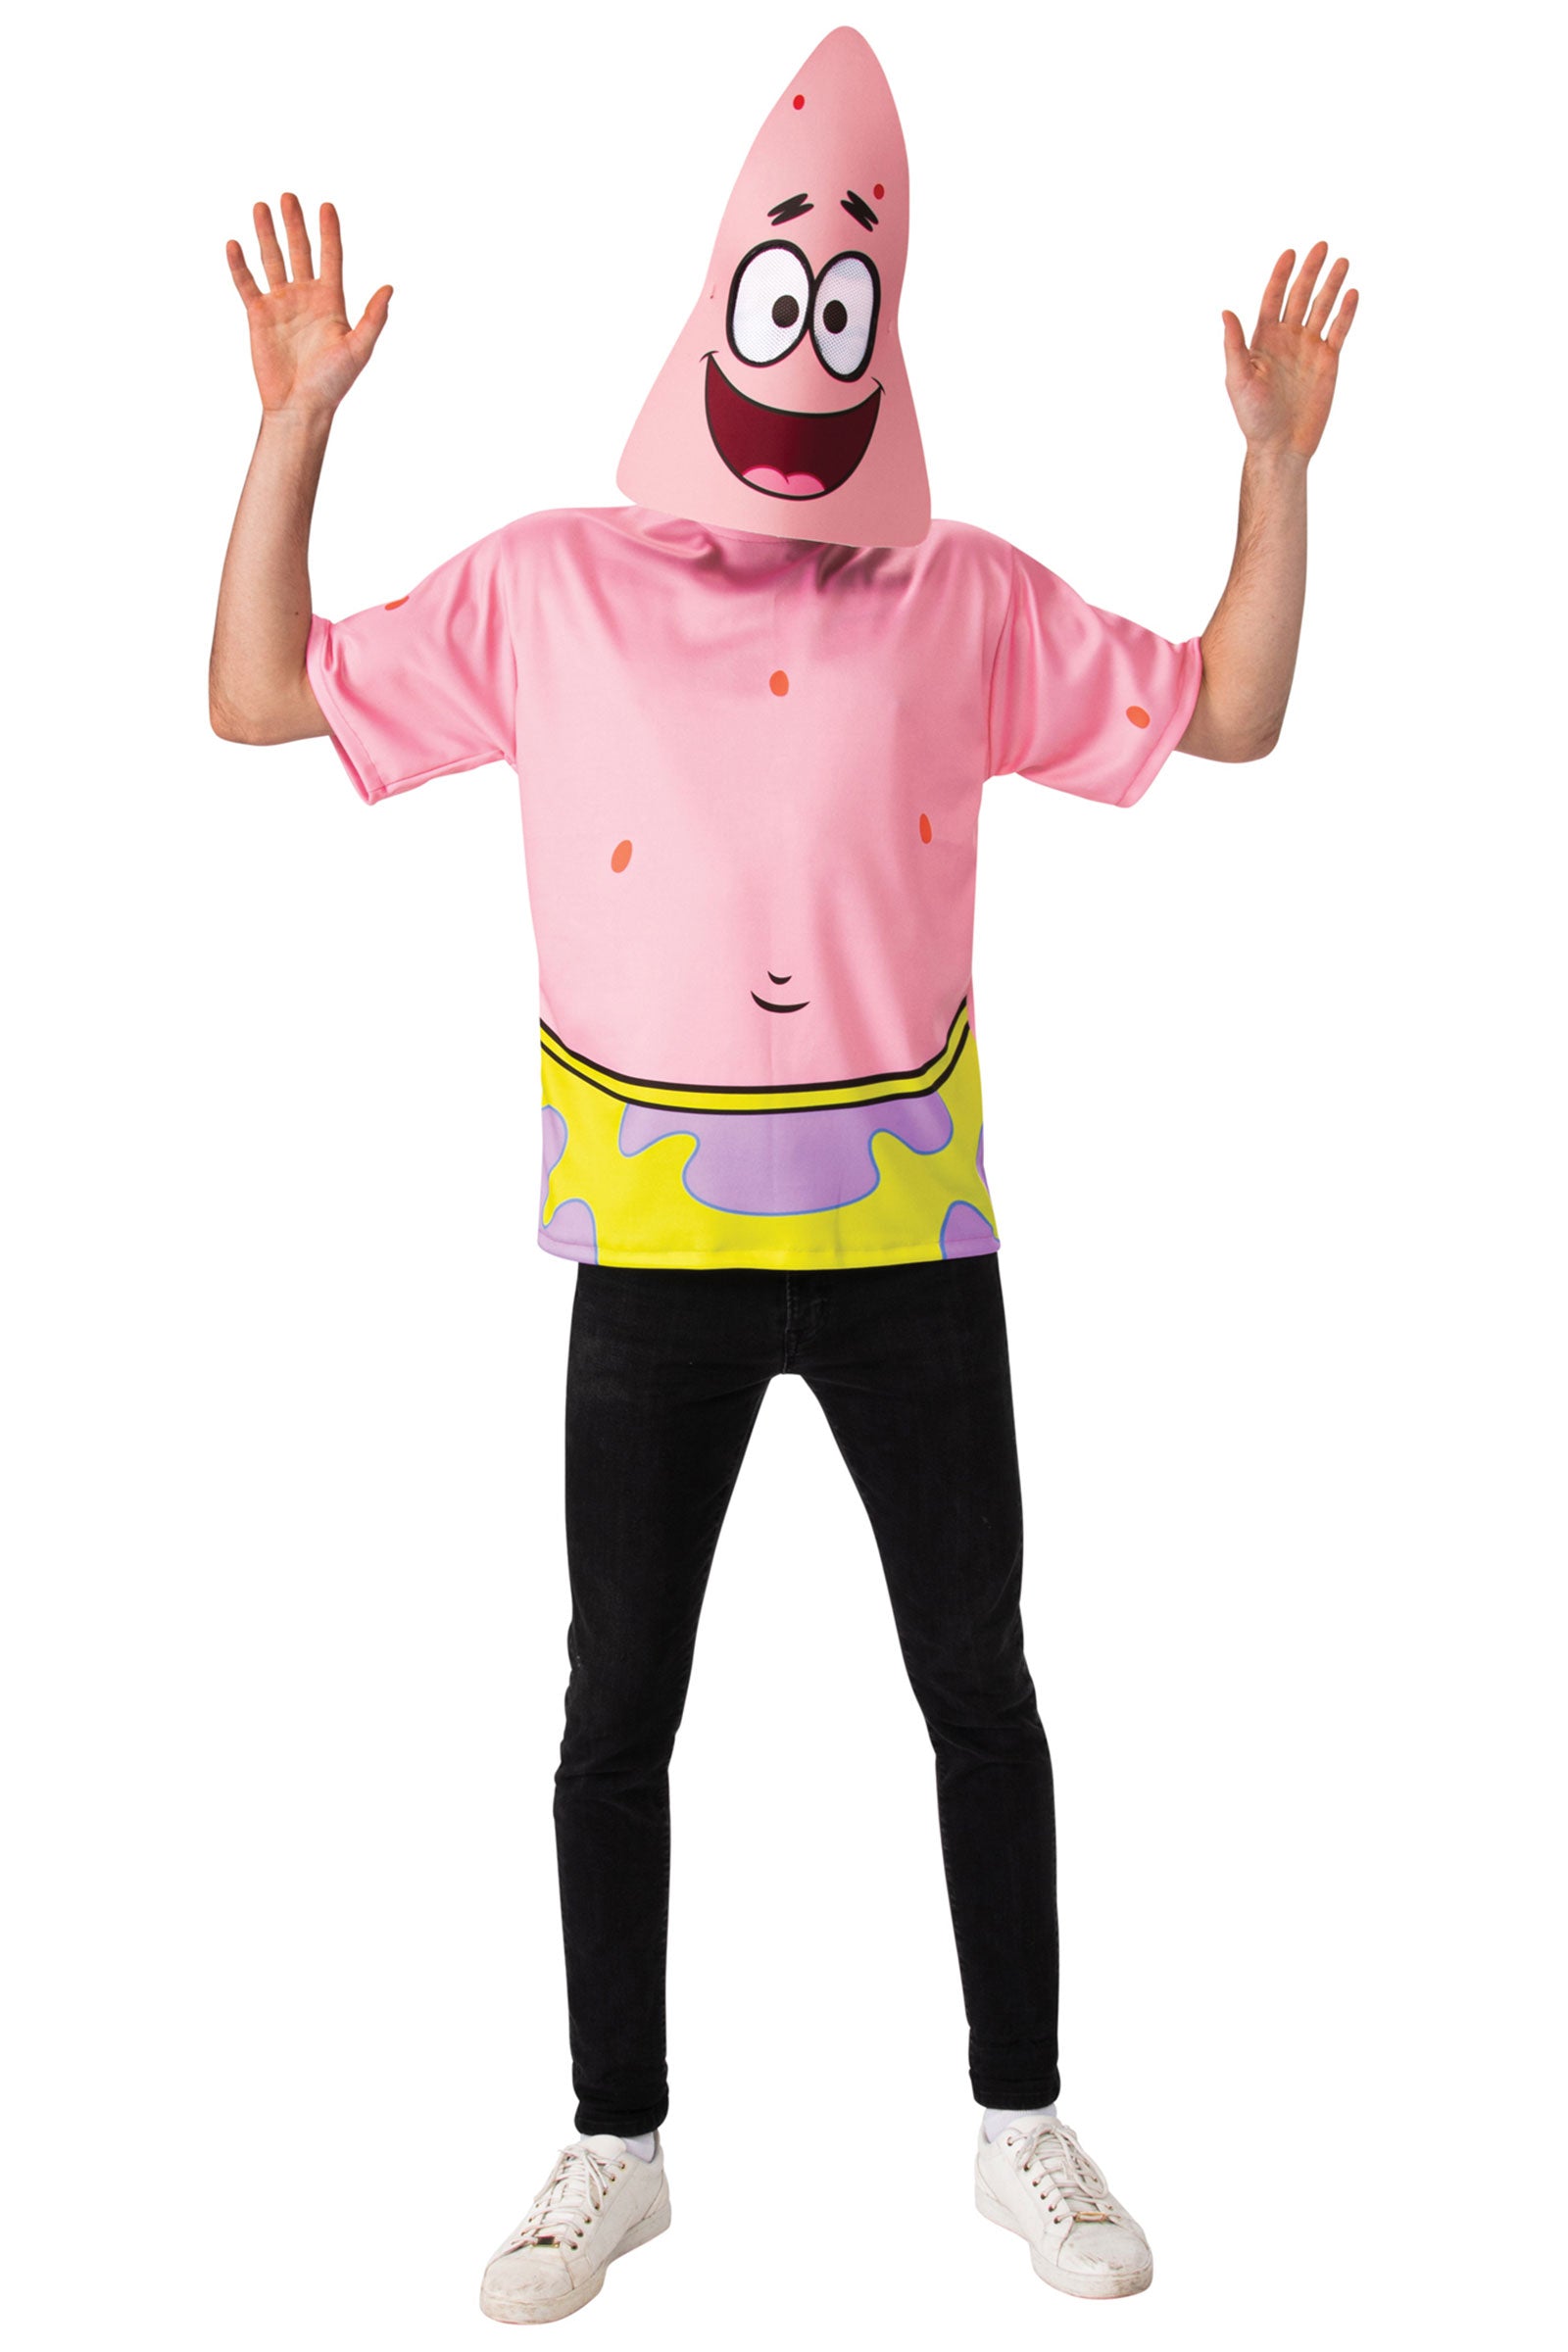 Patrick Adult Costume Top